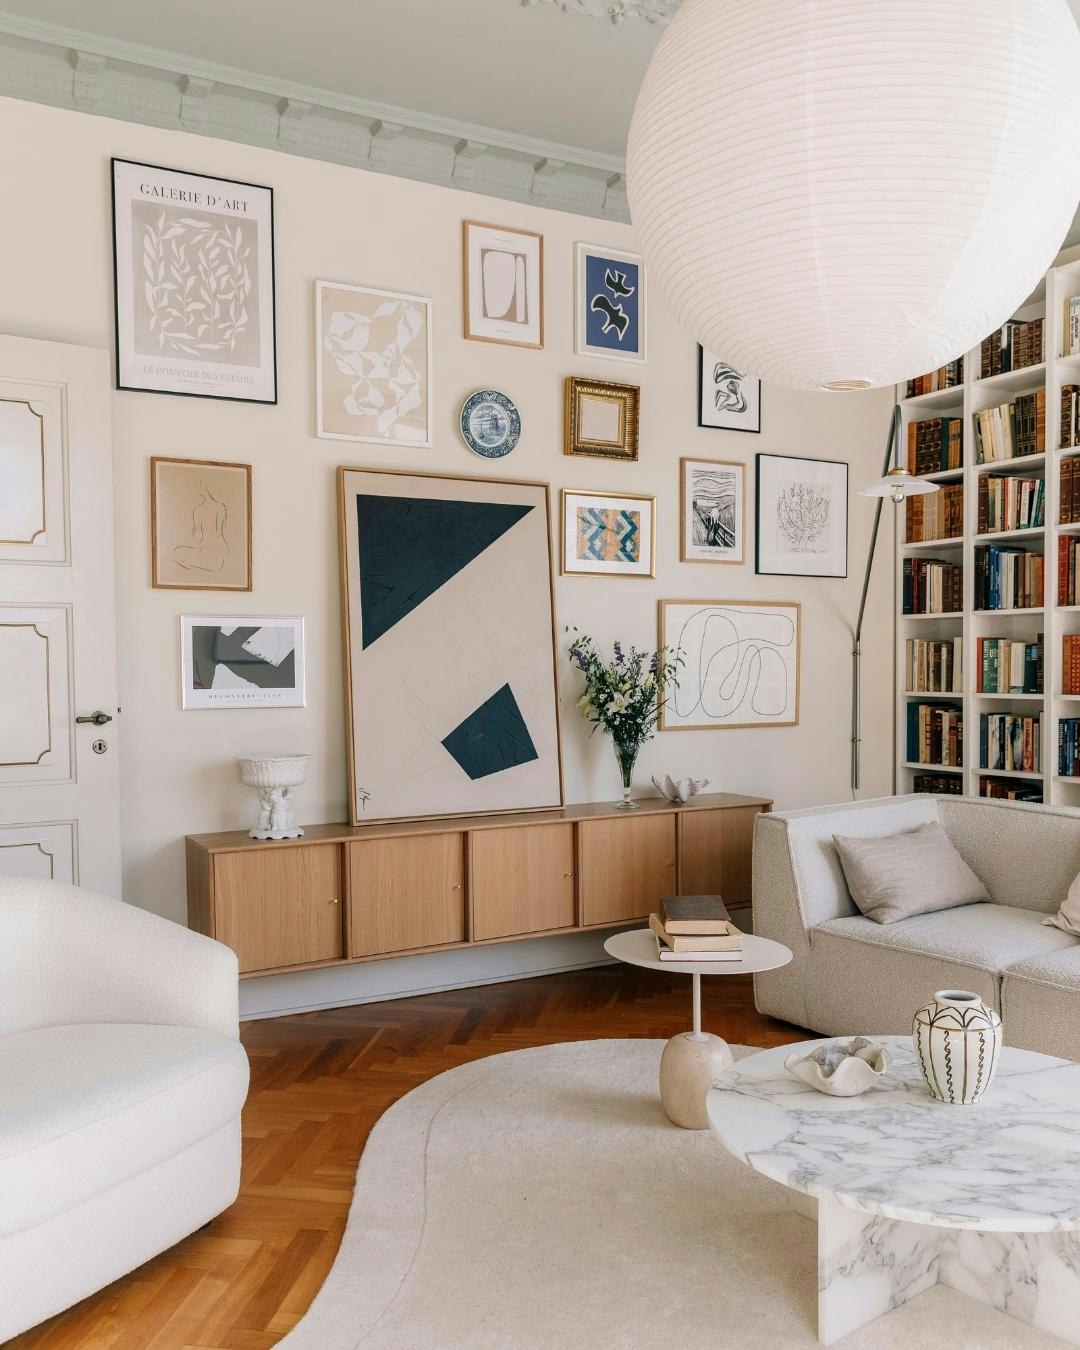 stue_billedveag_plakat_minimalistisk_malede-lofter.